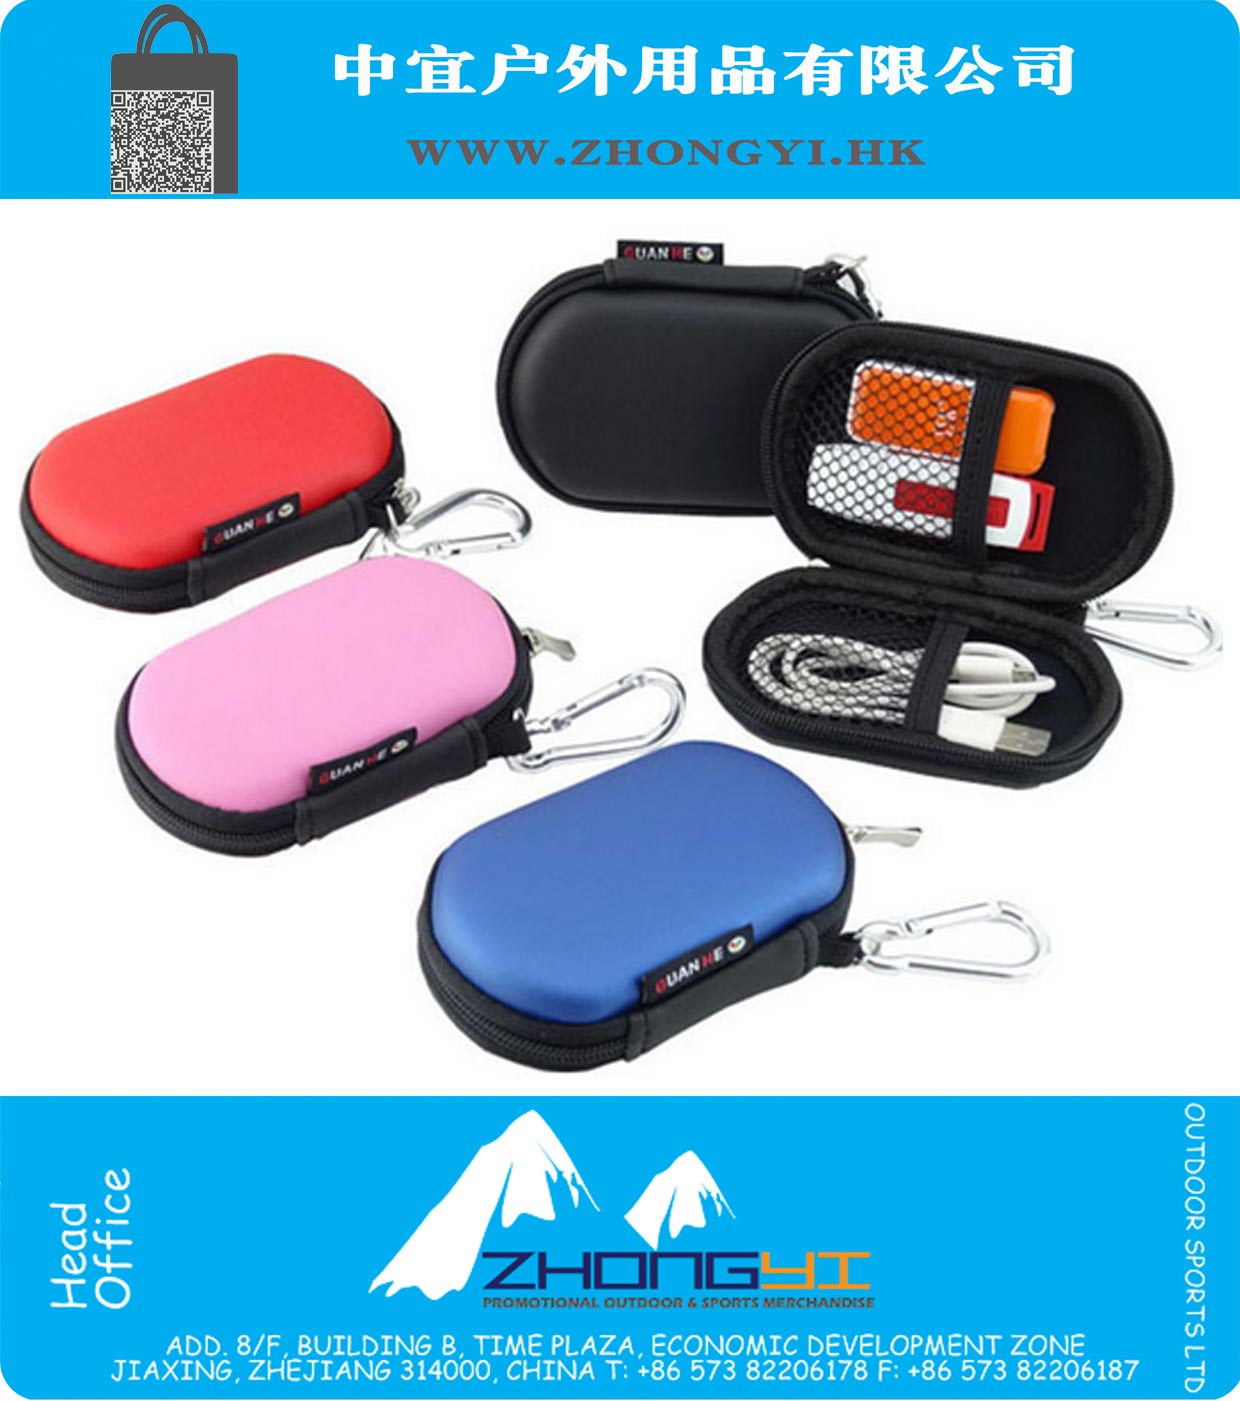 Gadget de viaje portátil digital mini oval bolsa bolsa de almacenamiento para auriculares USB flash disco de la tarjeta SD Cable de datos bolsas impermeables lindo